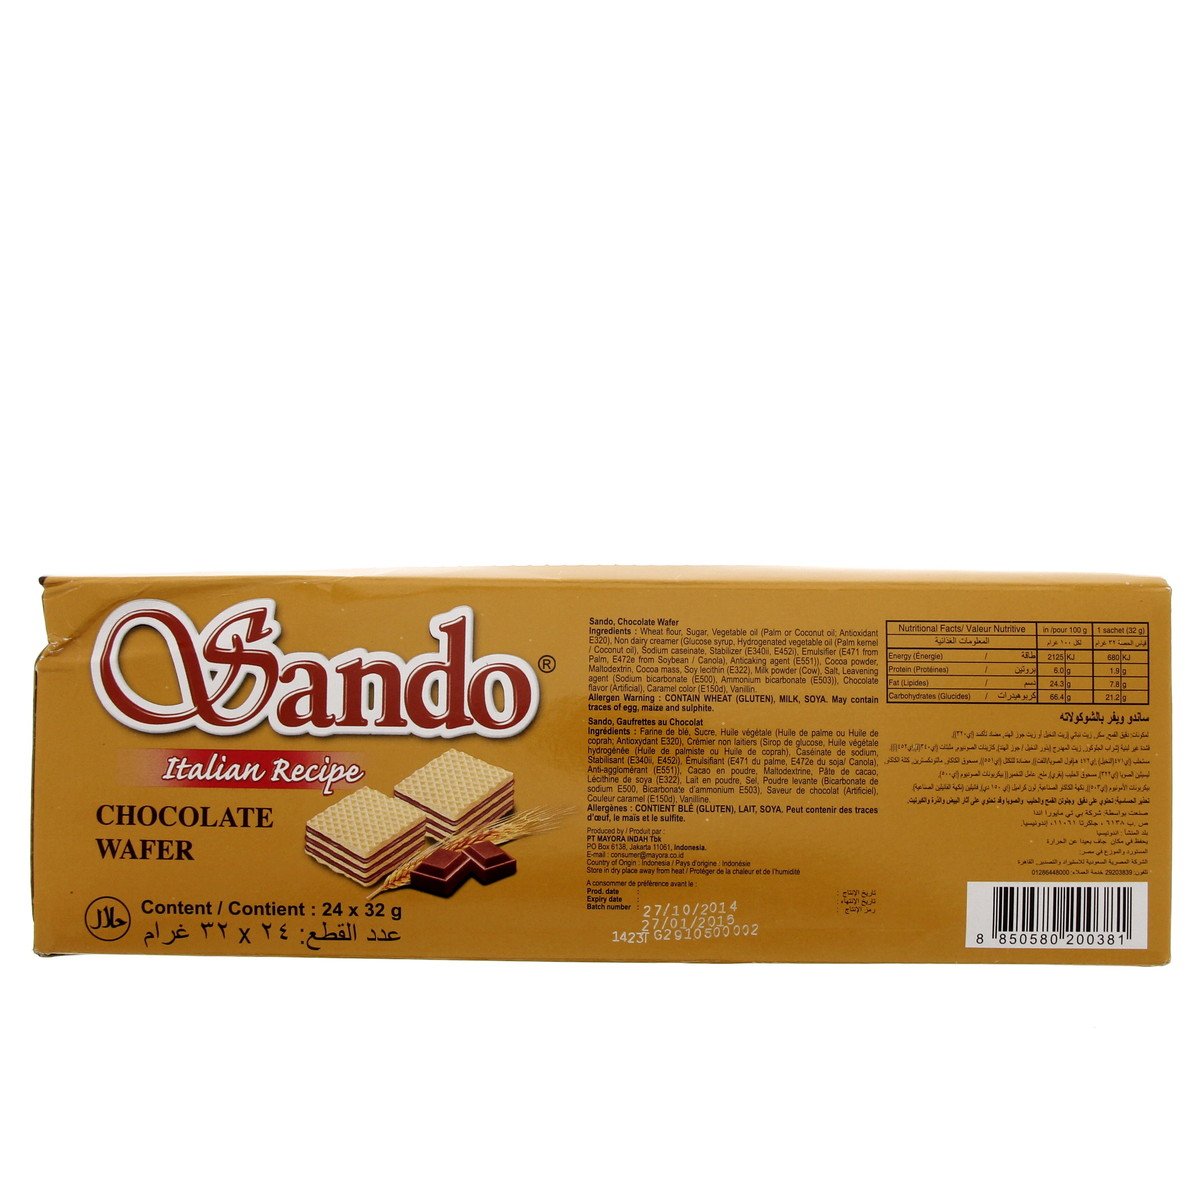 Sando Italian Reipe Chocolate Wafer 32g x 24 Pieces